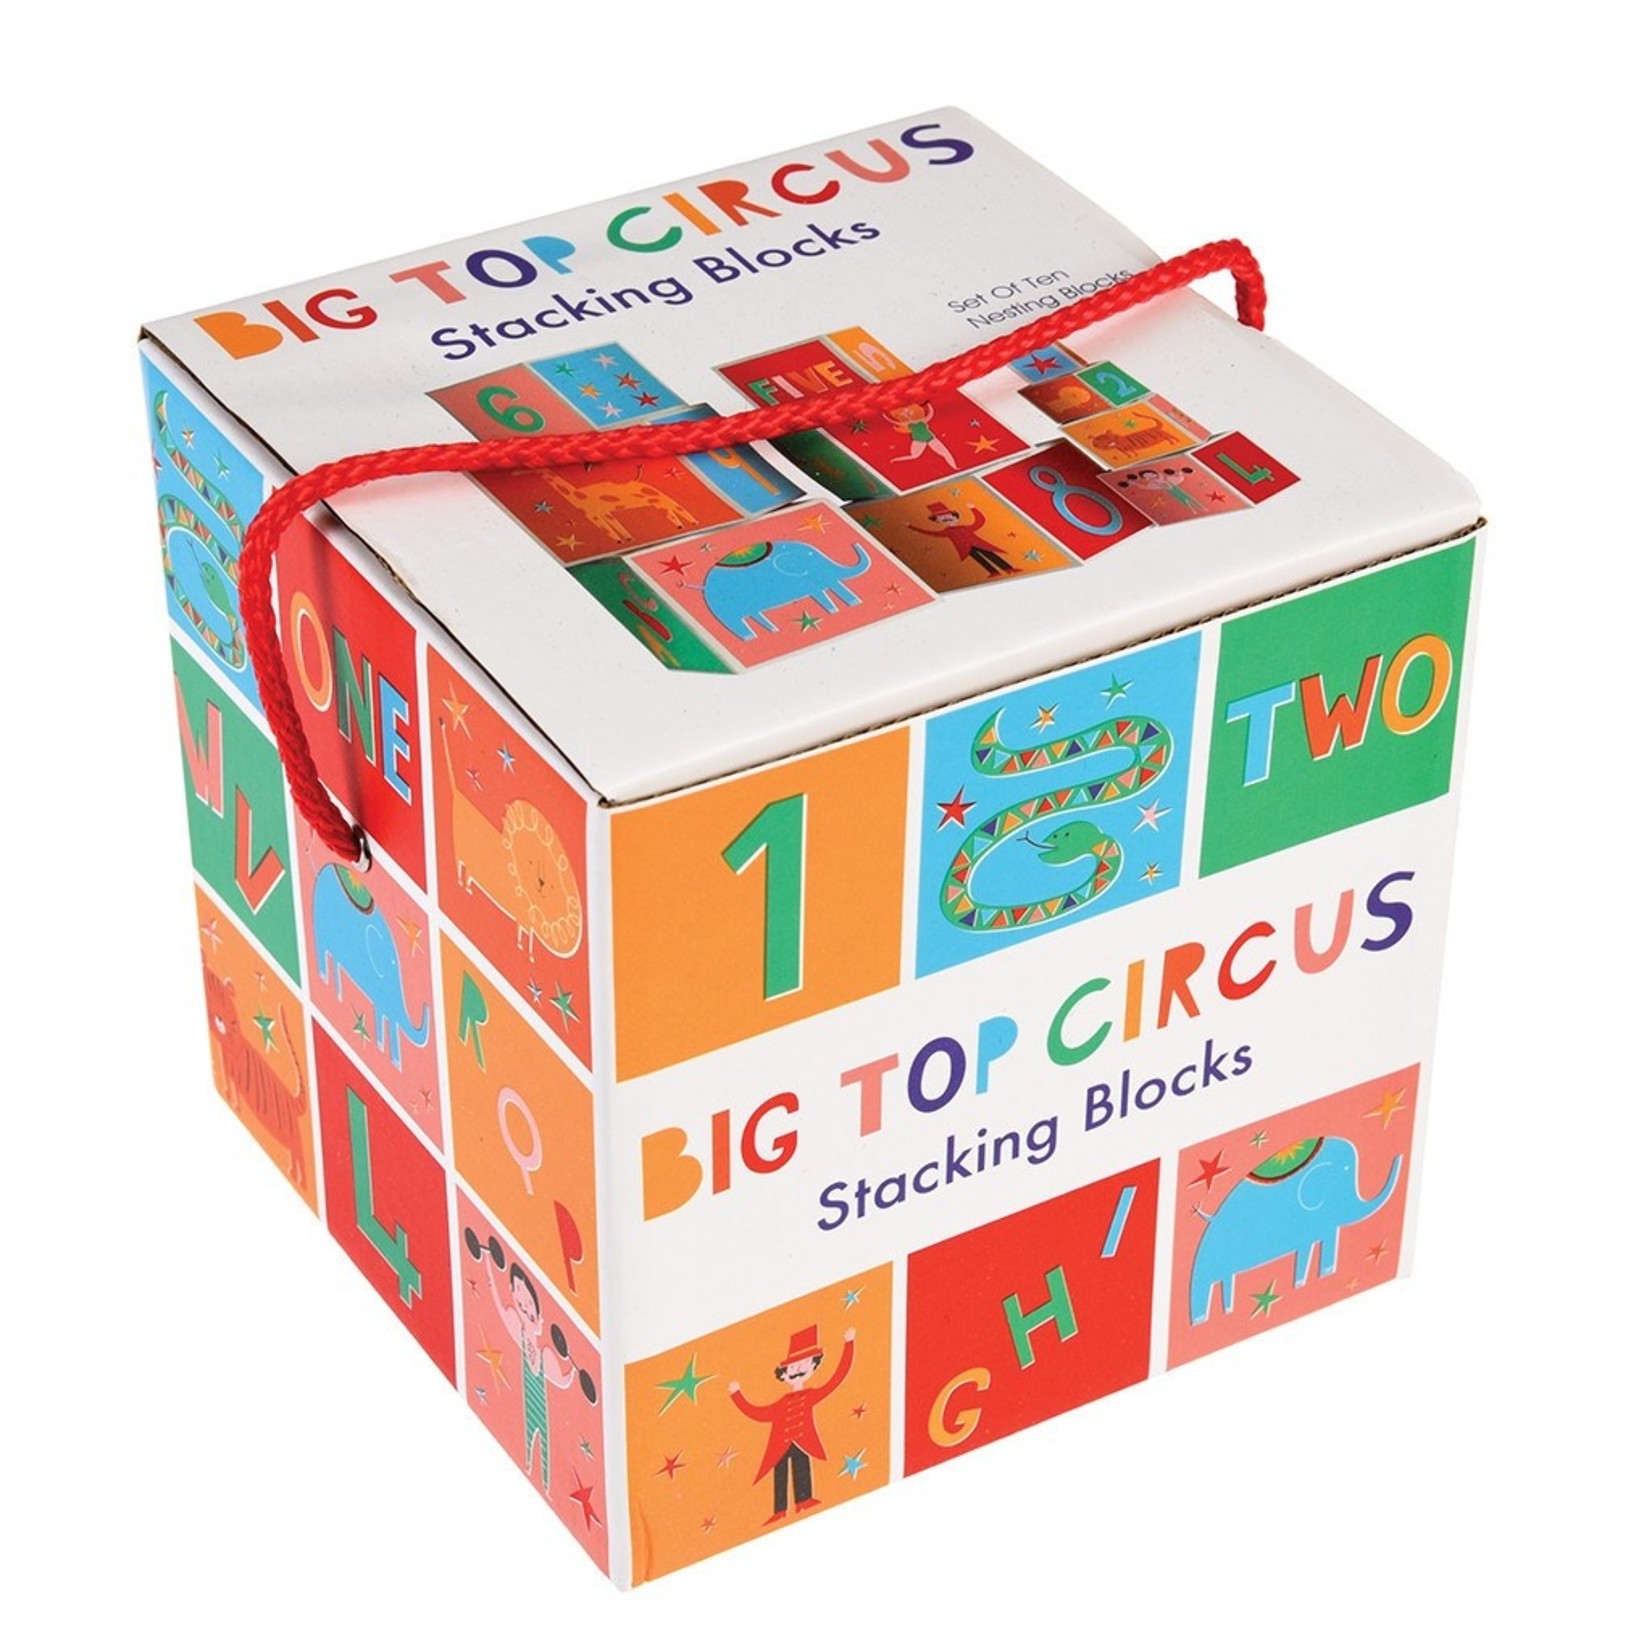 Big Top Circus Nesting / Stacking Blocks - Set of 10